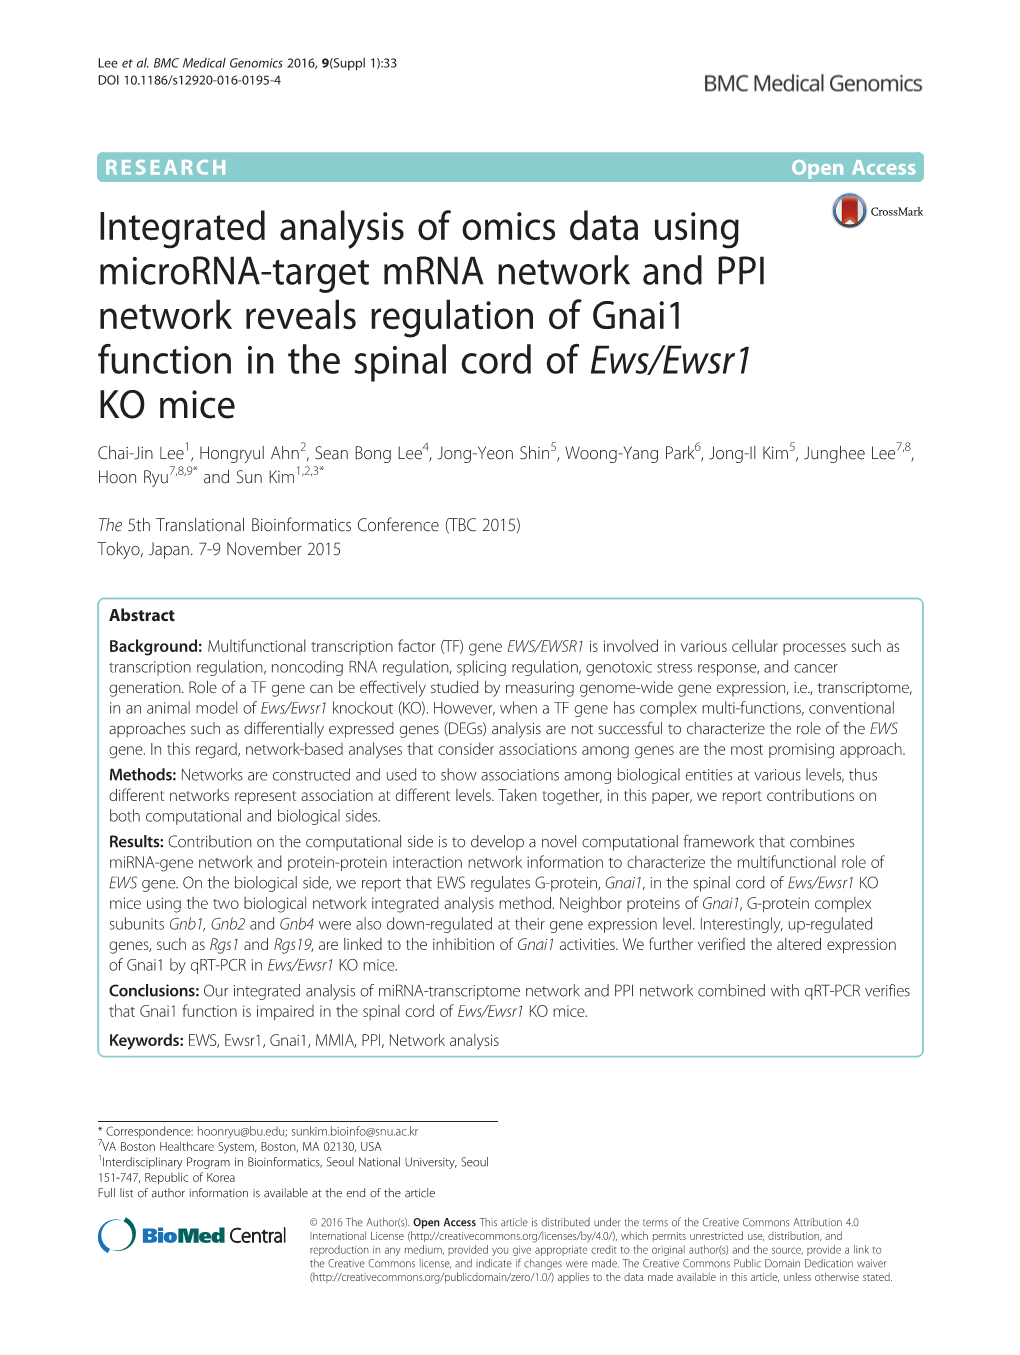 Integrated Analysis of Omics Data Using Microrna-Target Mrna